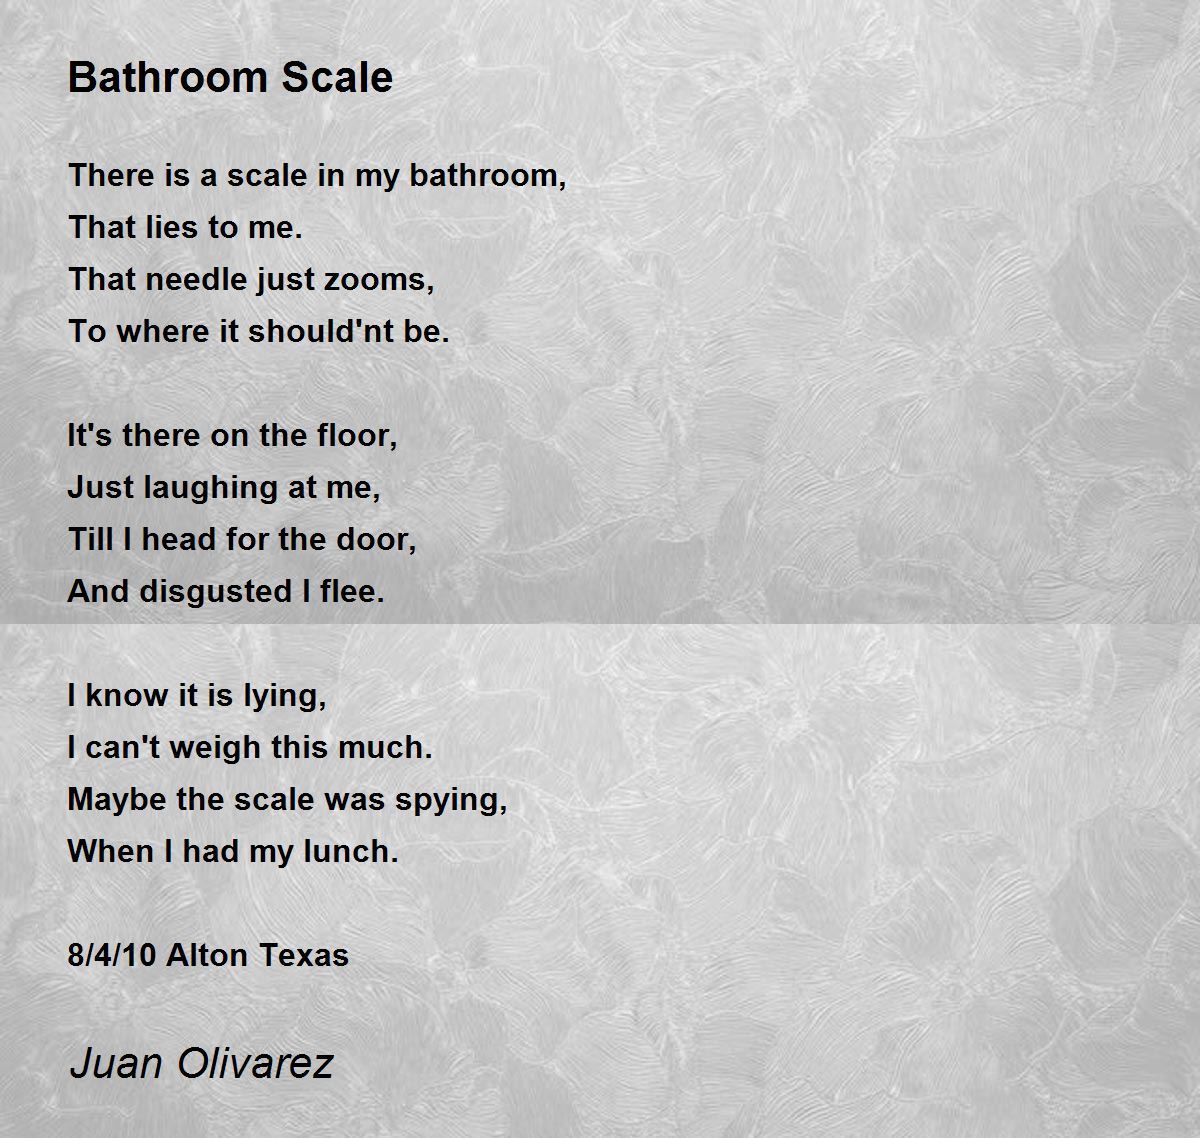 https://img.poemhunter.com/i/poem_images/875/bathroom-scale.jpg